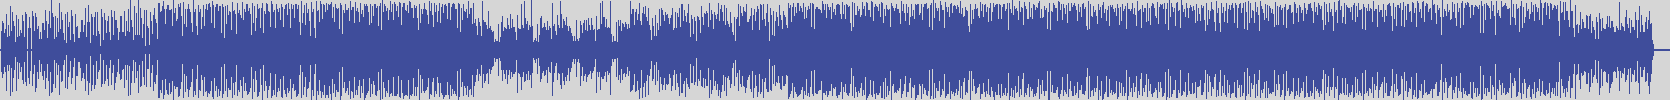 nf_boyz_records [NFY079] Frederic Le Monde - Phoenix Trade [Blue Ocean Mix] audio wave form